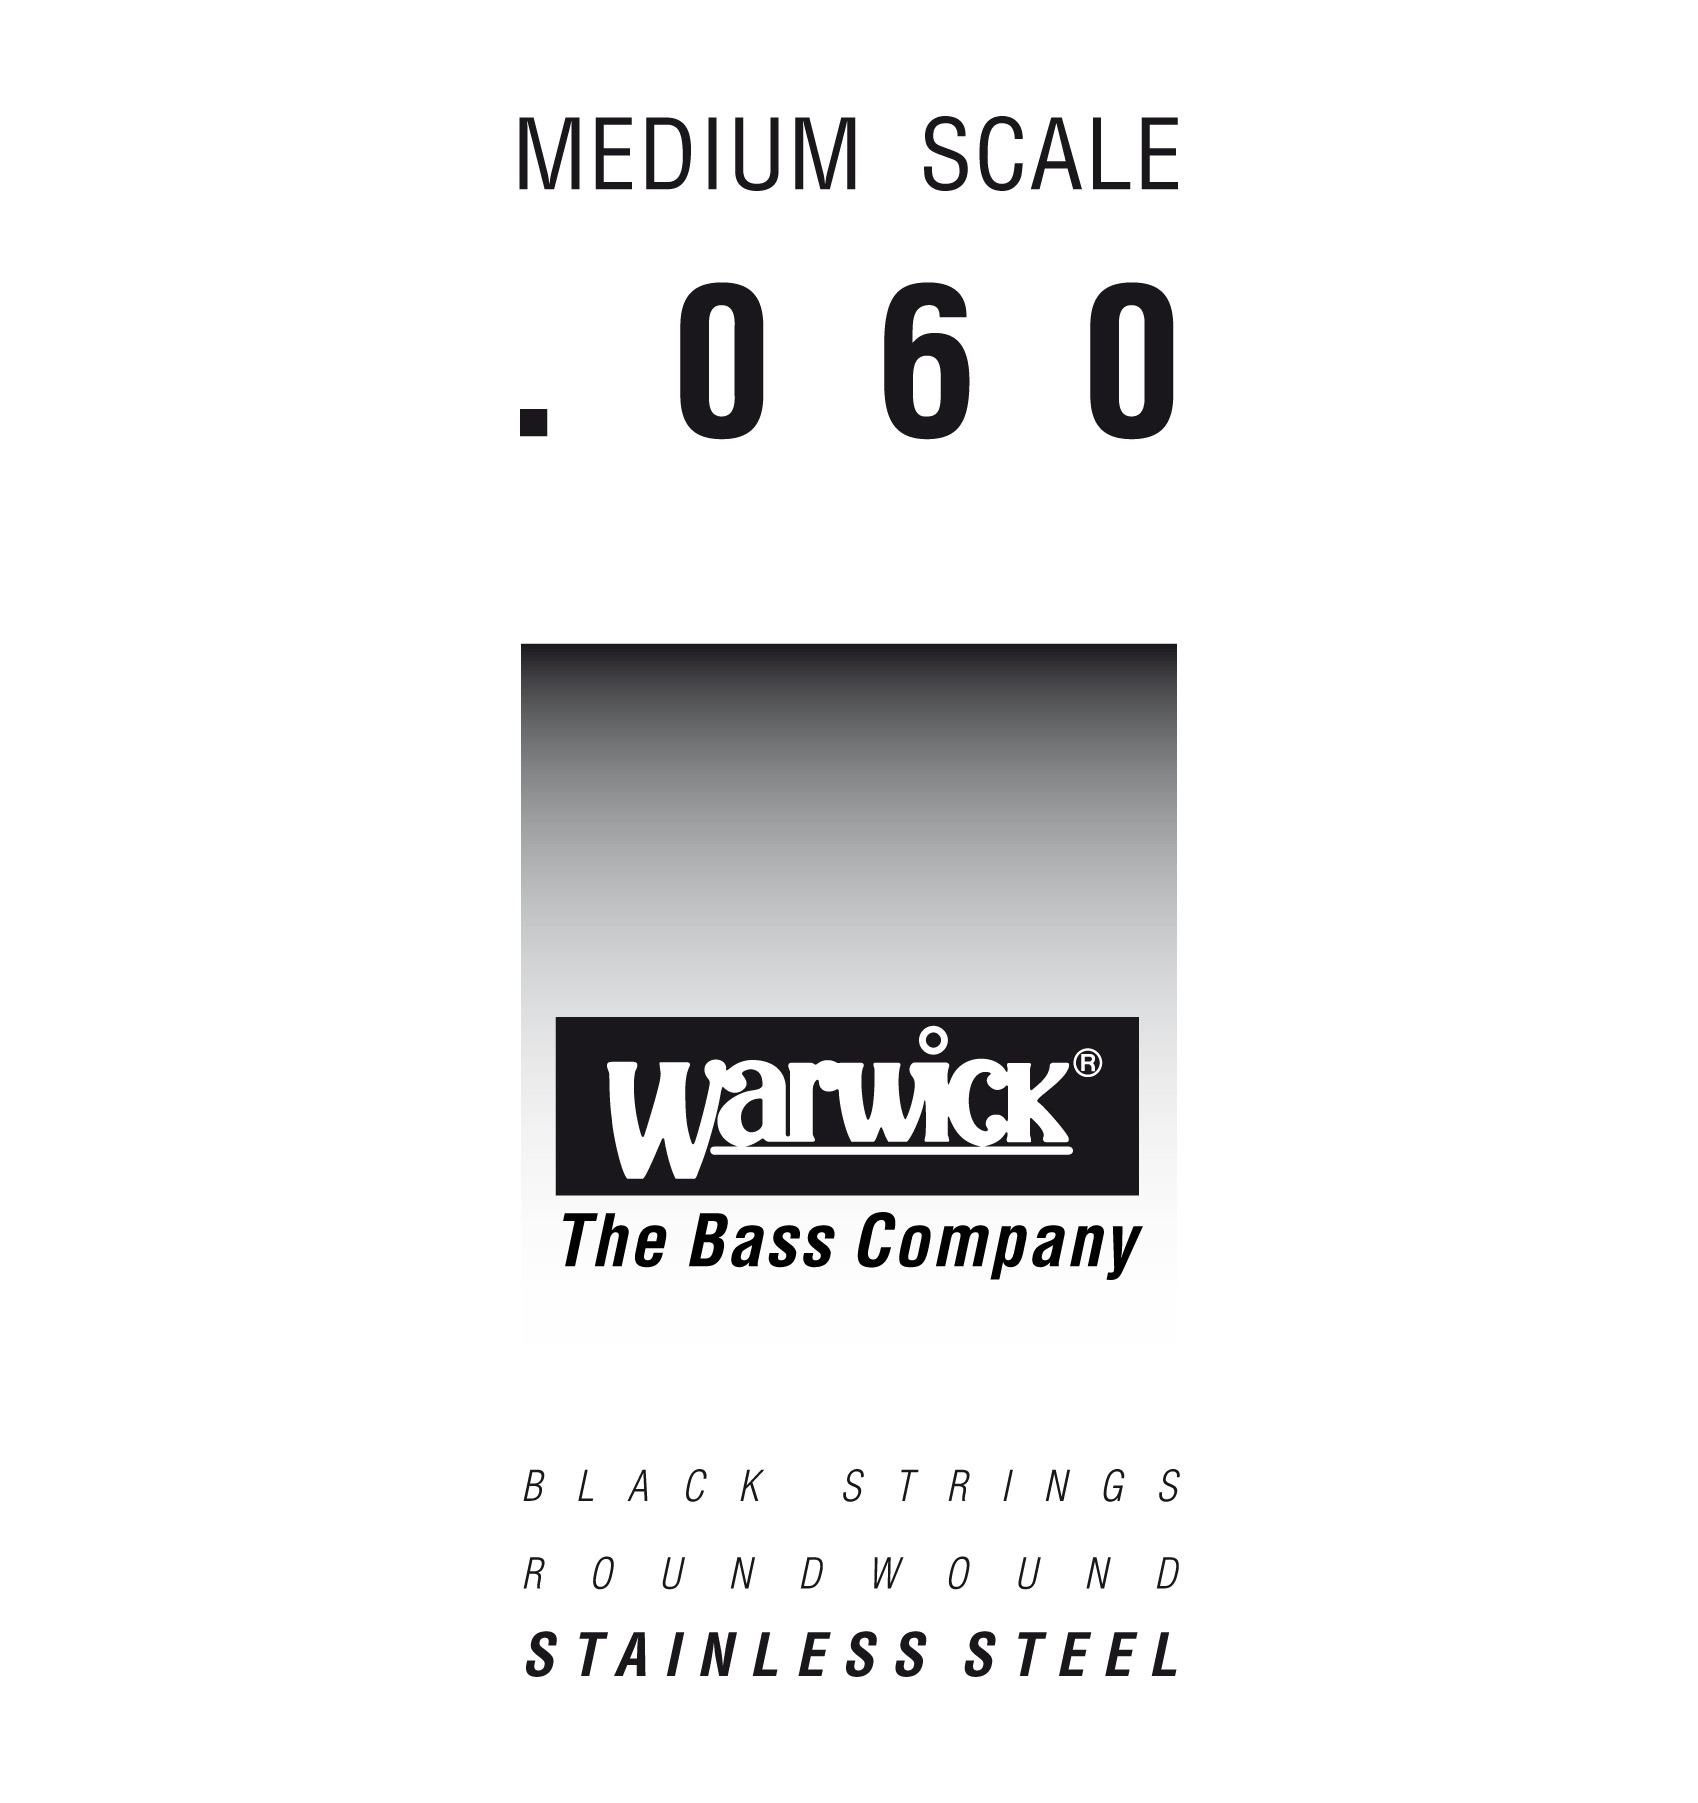 Warwick Black Label Bass Strings, Stainless Steel - Bass Single String, .060", Medium Scale